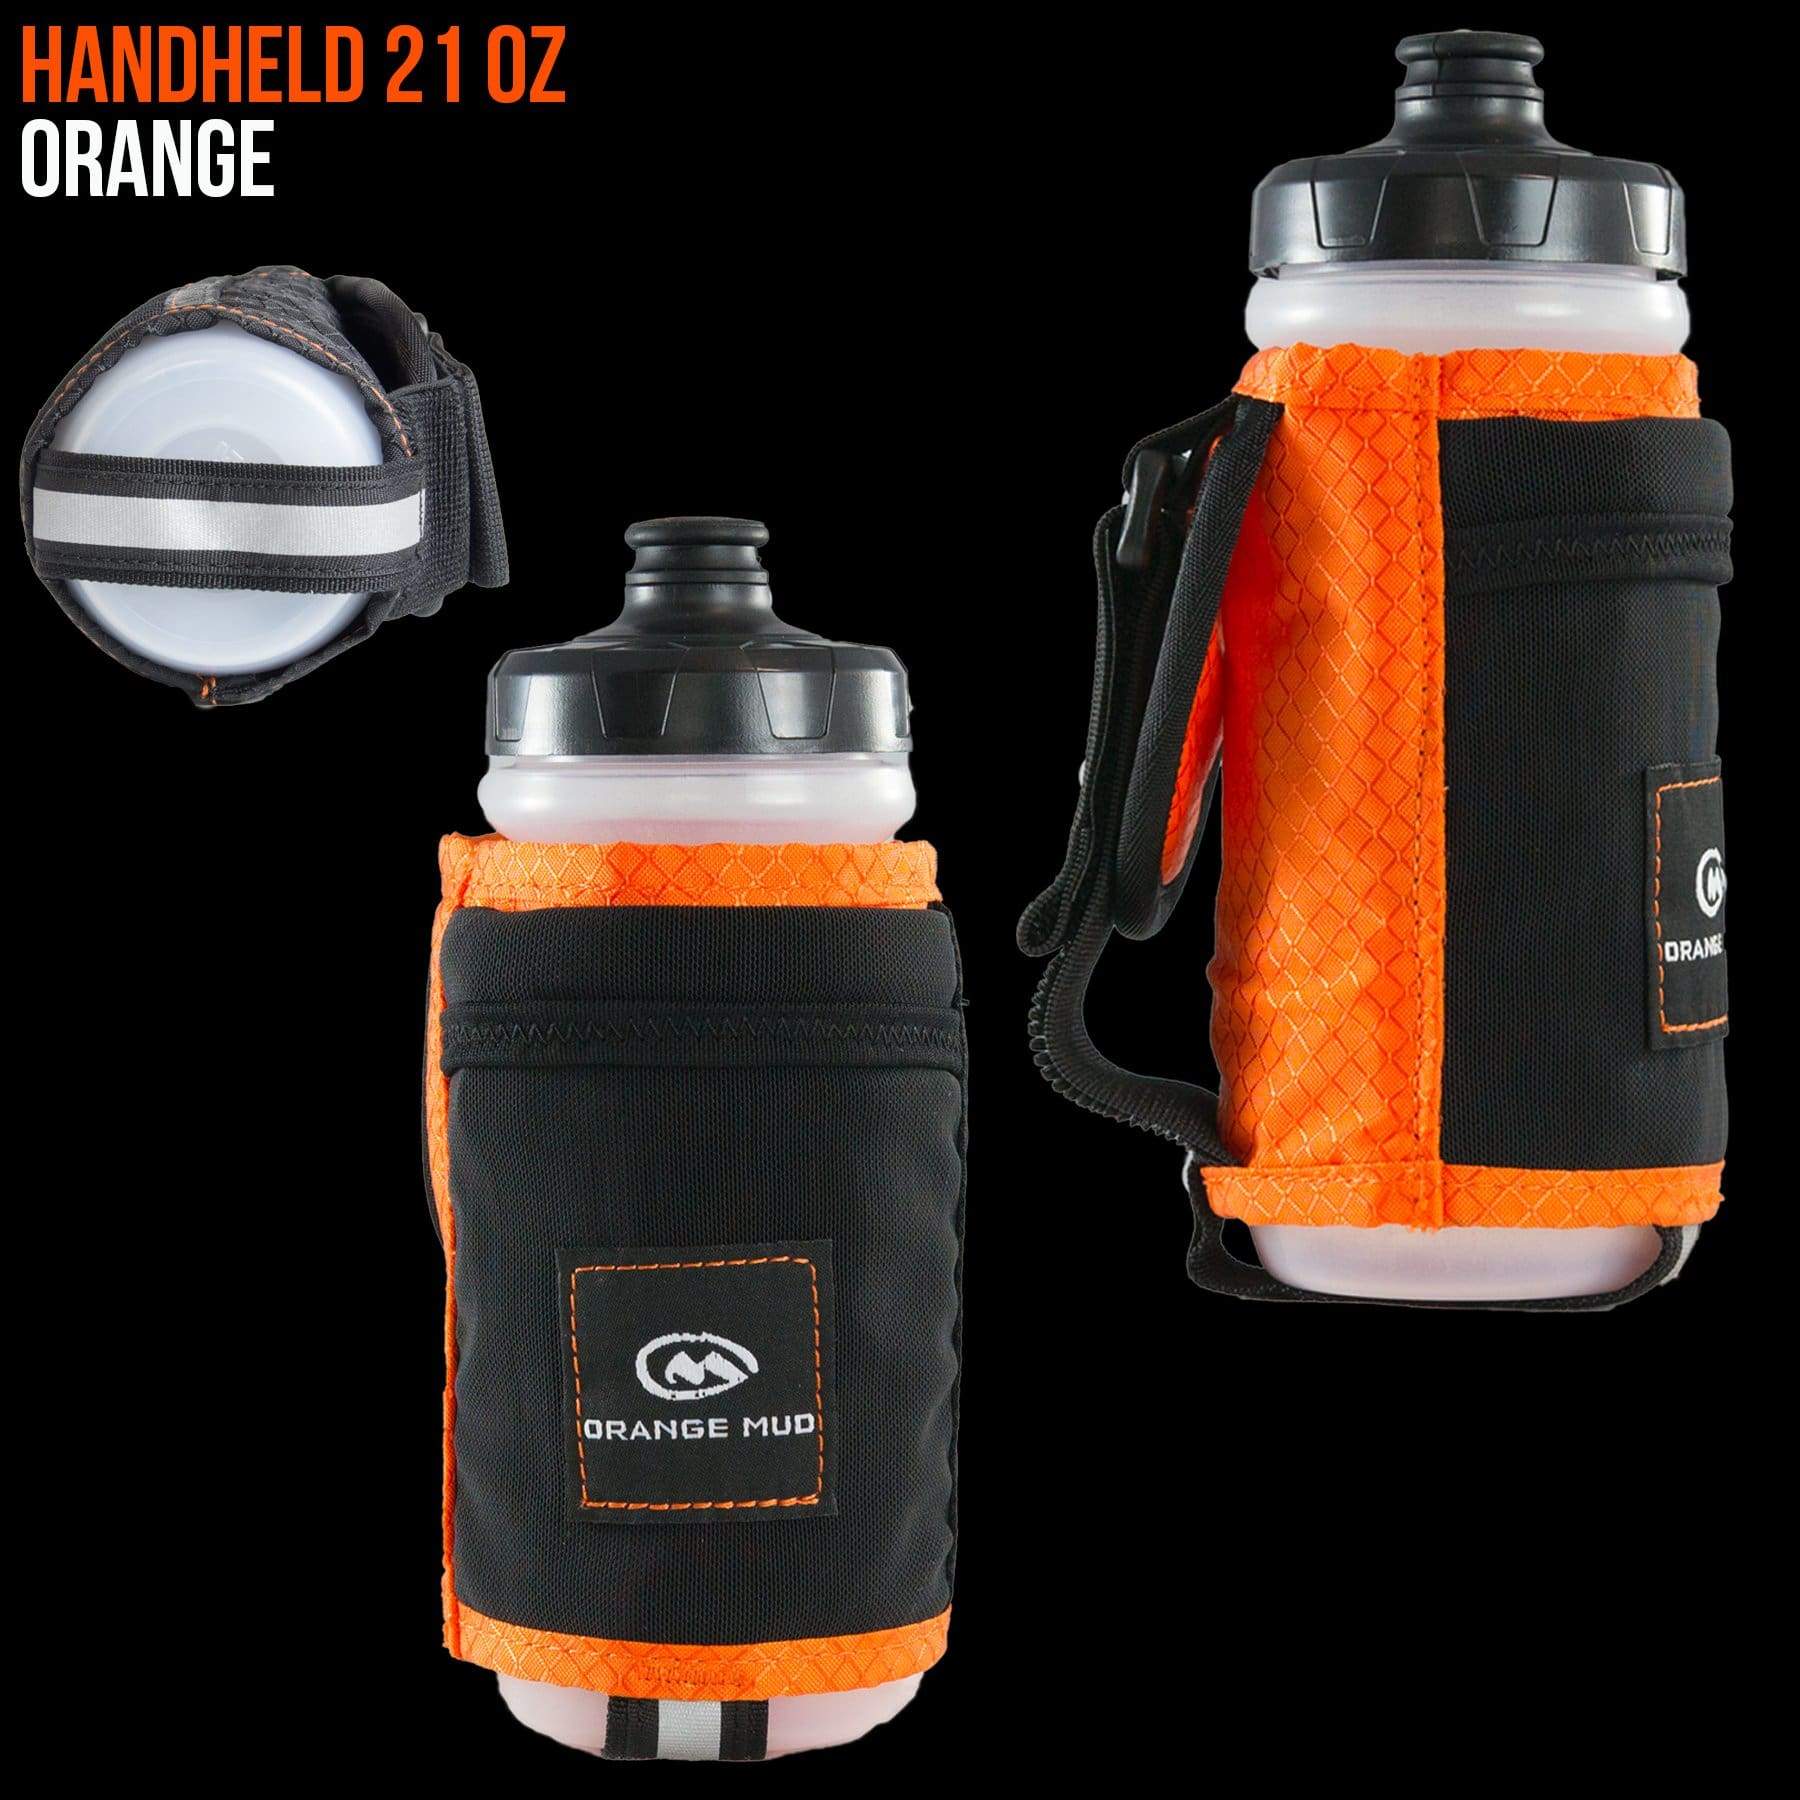 ORANGE MUD Running Water Bottle Handheld Hydration Pack 21 OZ